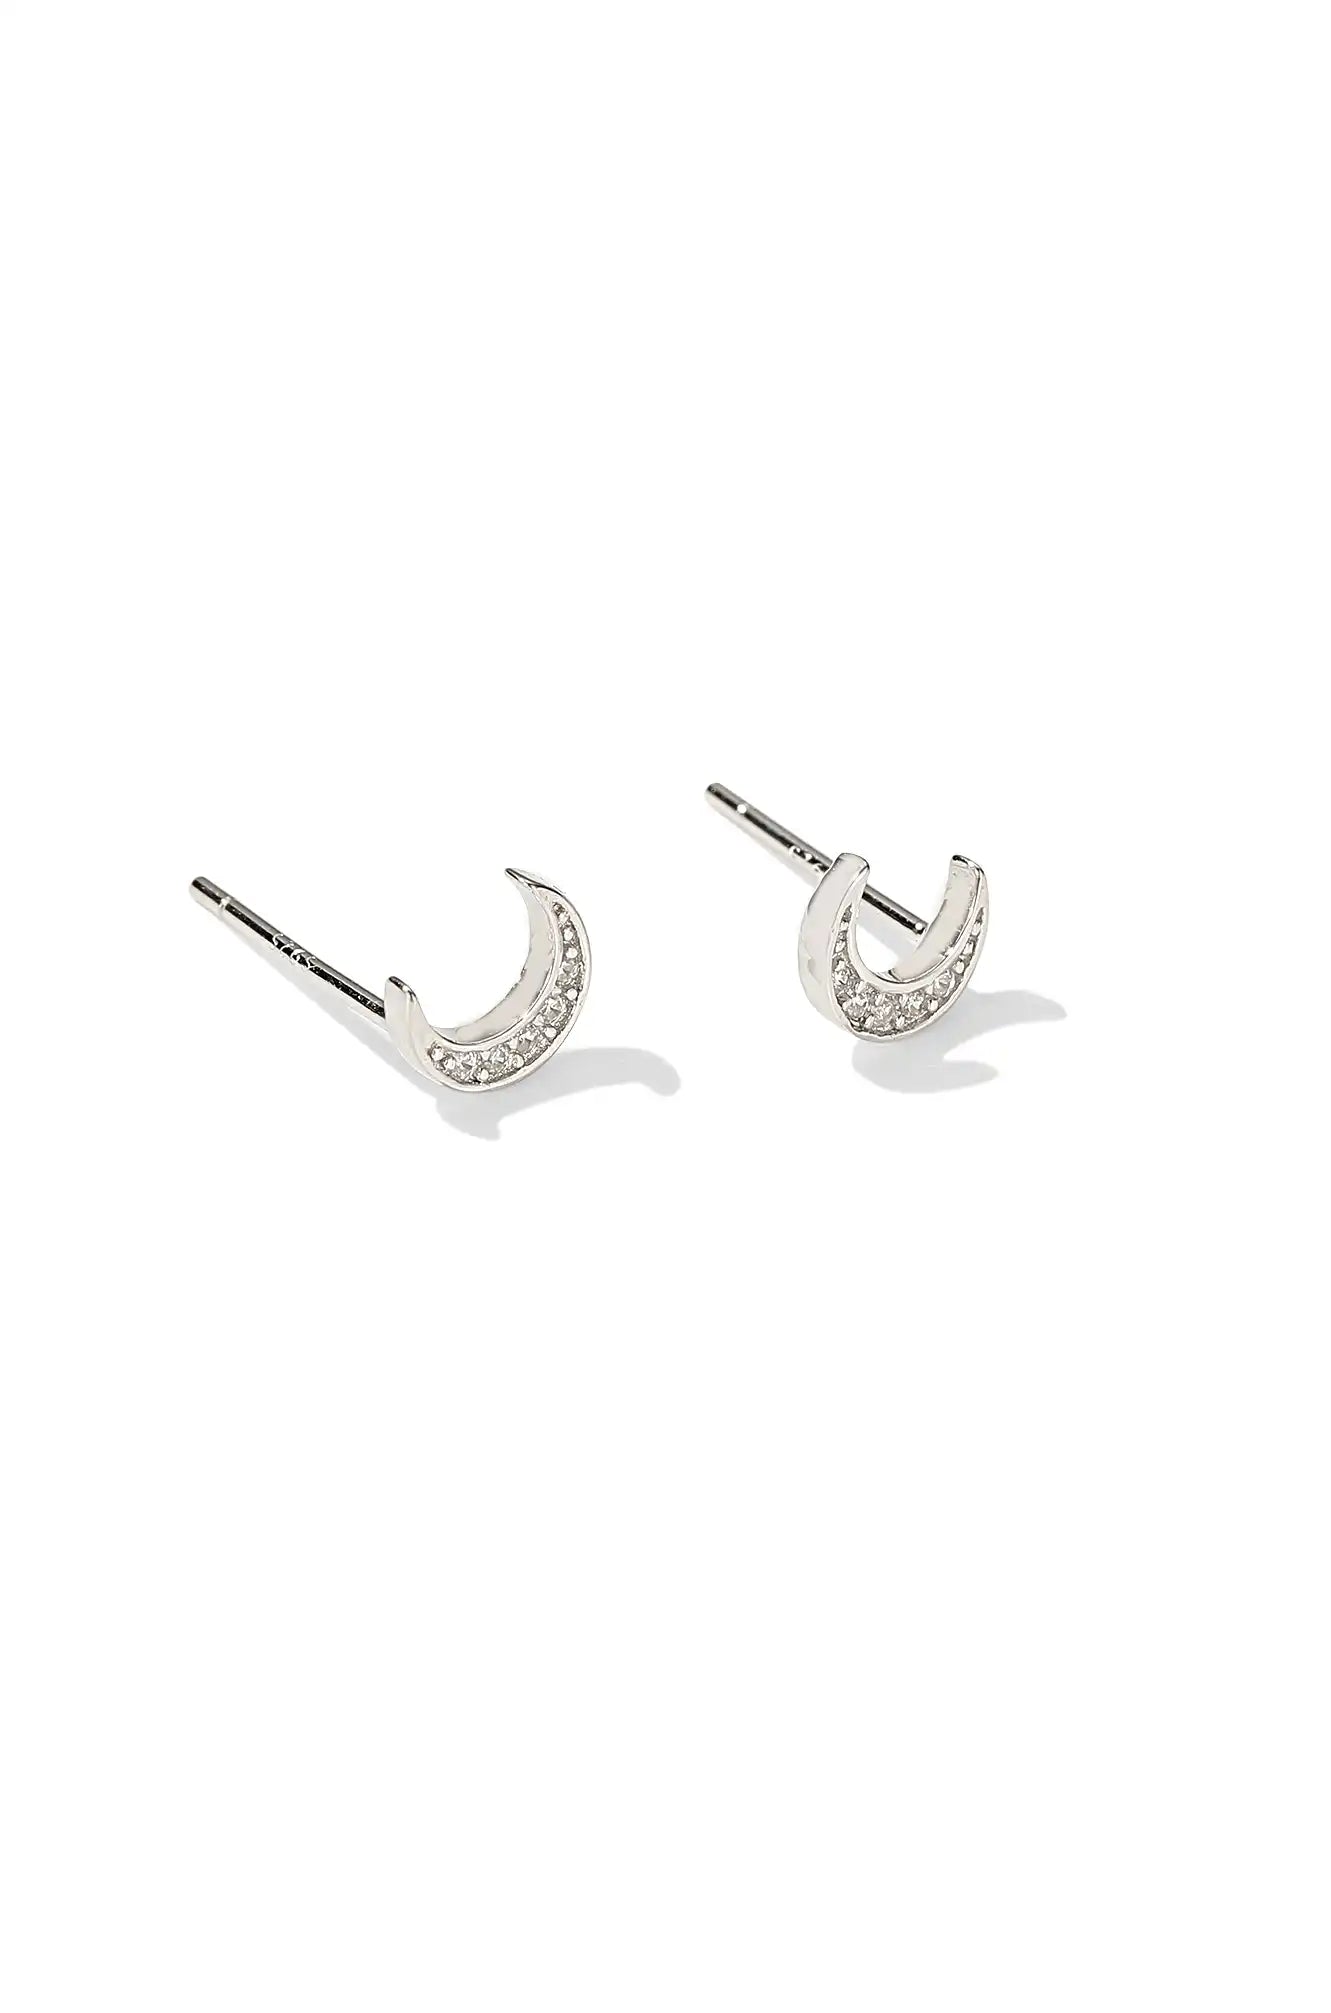 Chibiusa Moon Earrings